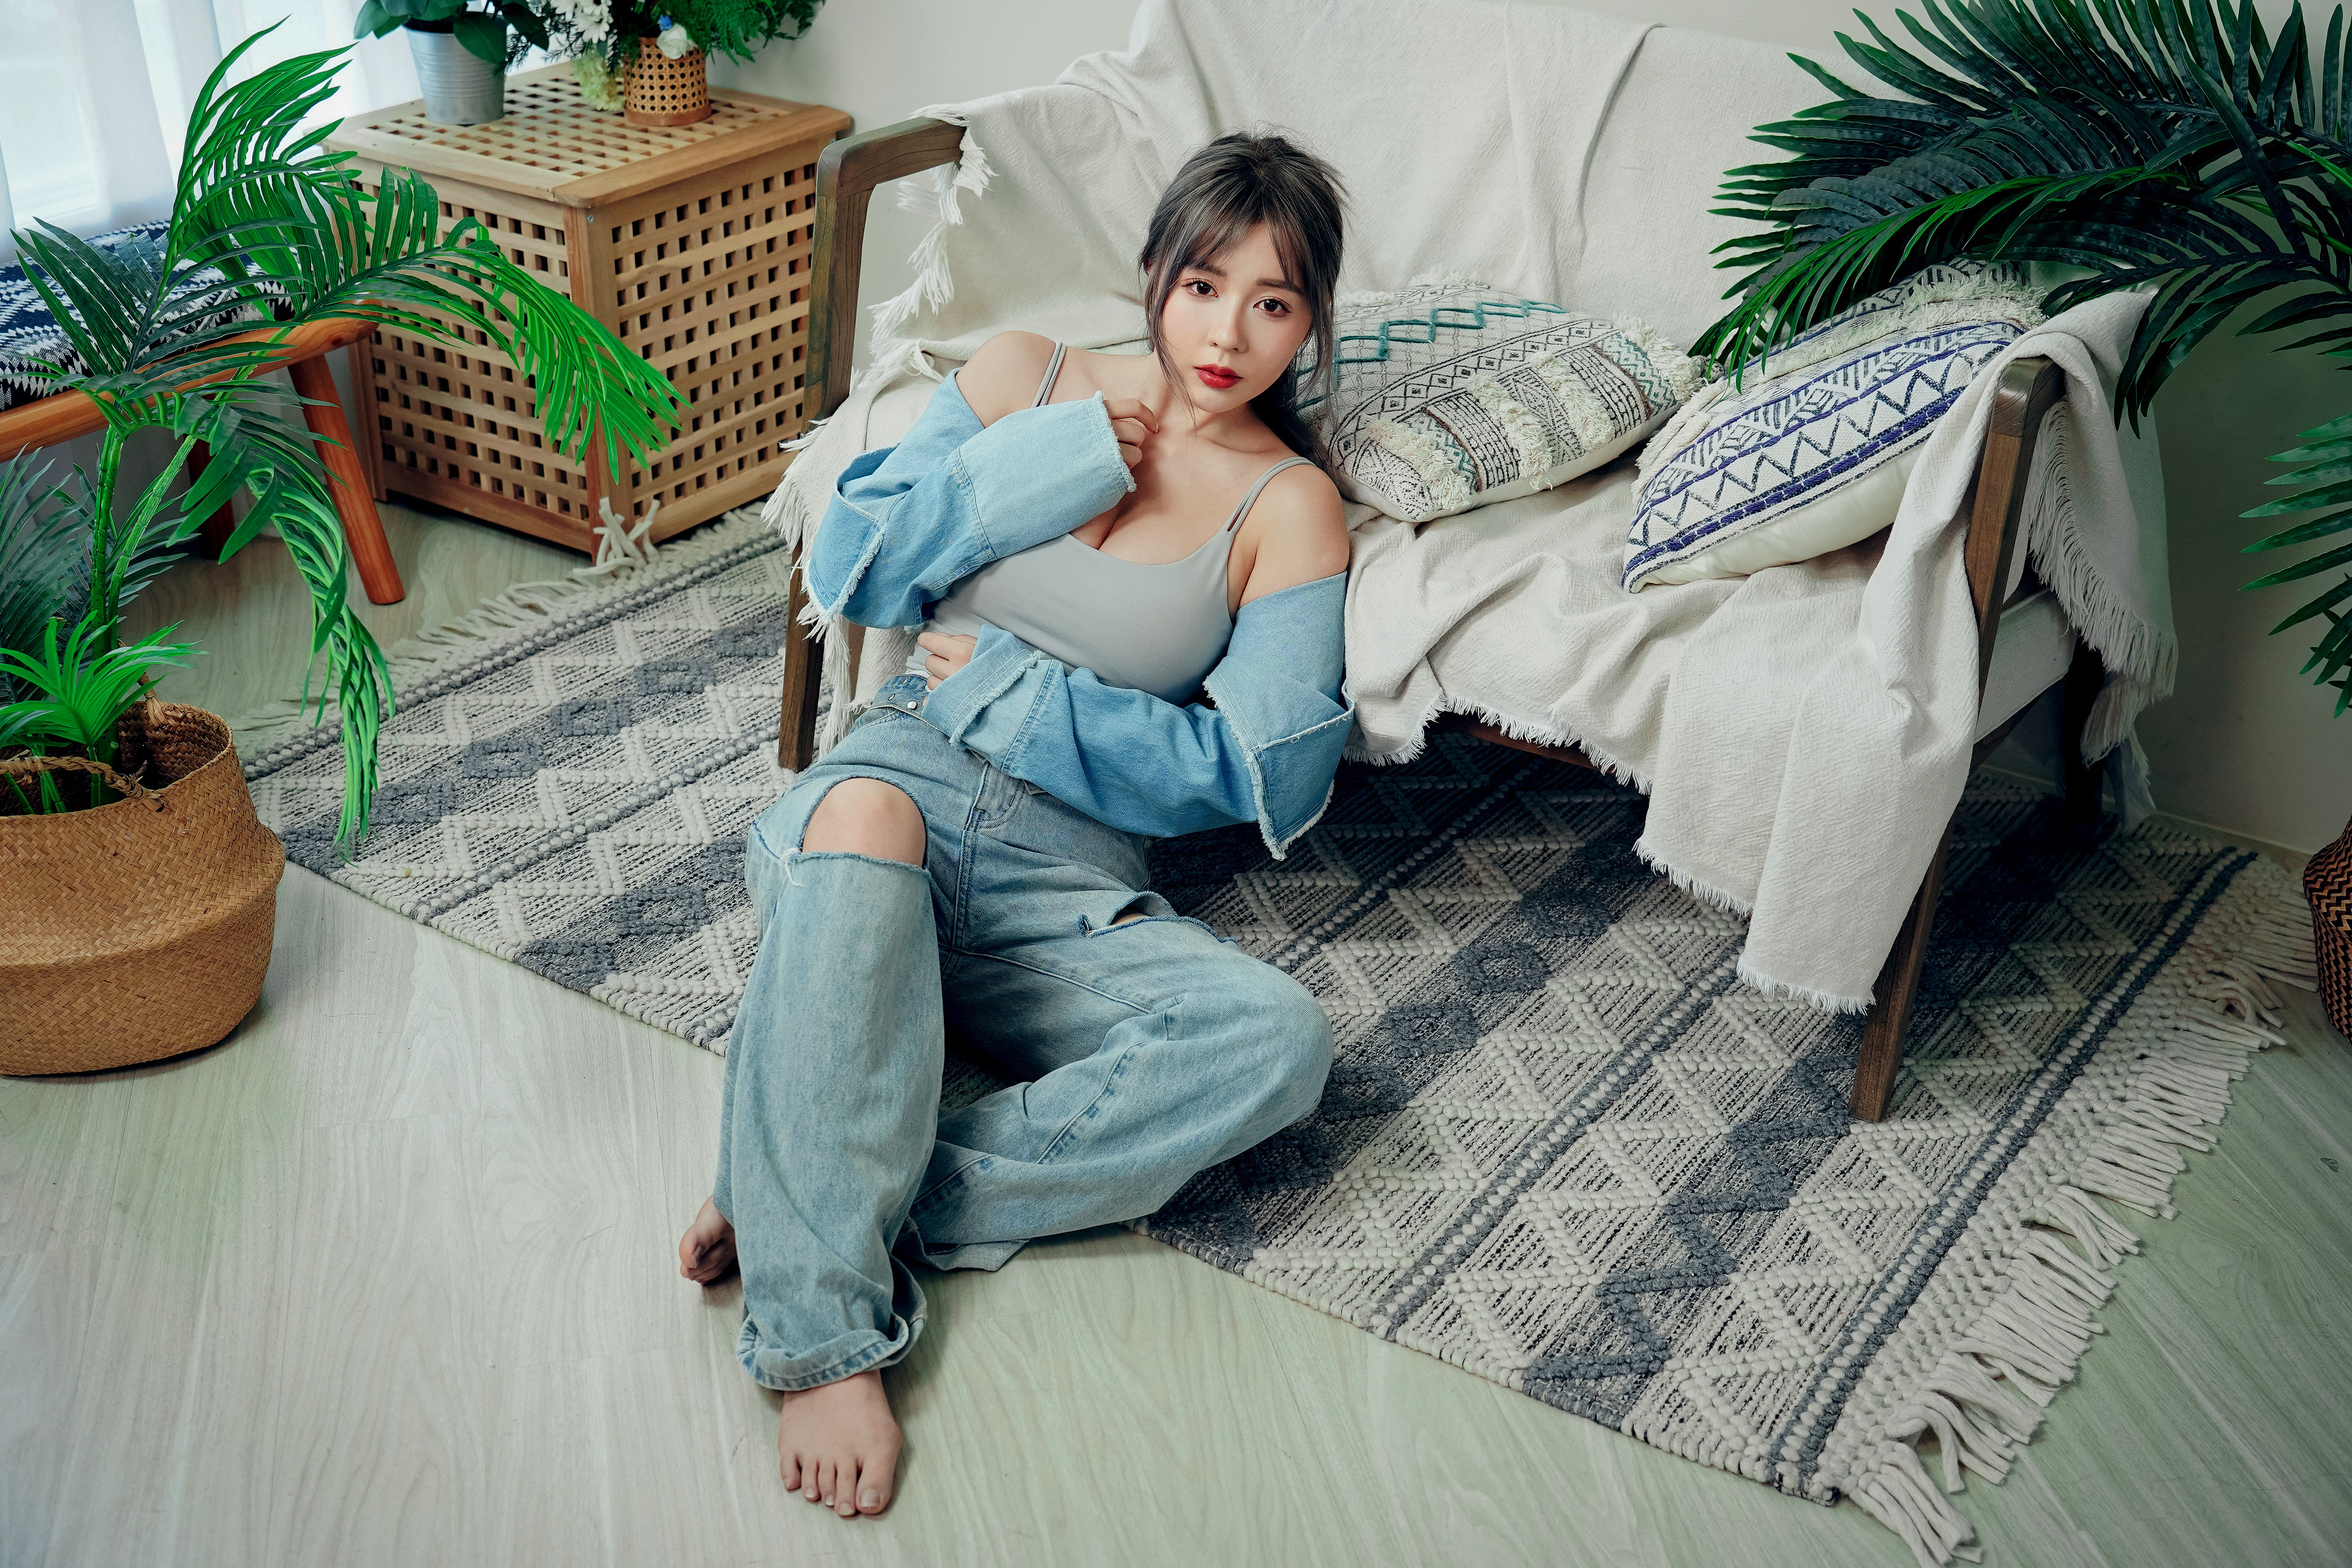 Asian Model Women Dyed Hair Long Hair Ponytail Carpet Couch Pillow Sitting Jeans Denim Jacket Barefo 3840x2560